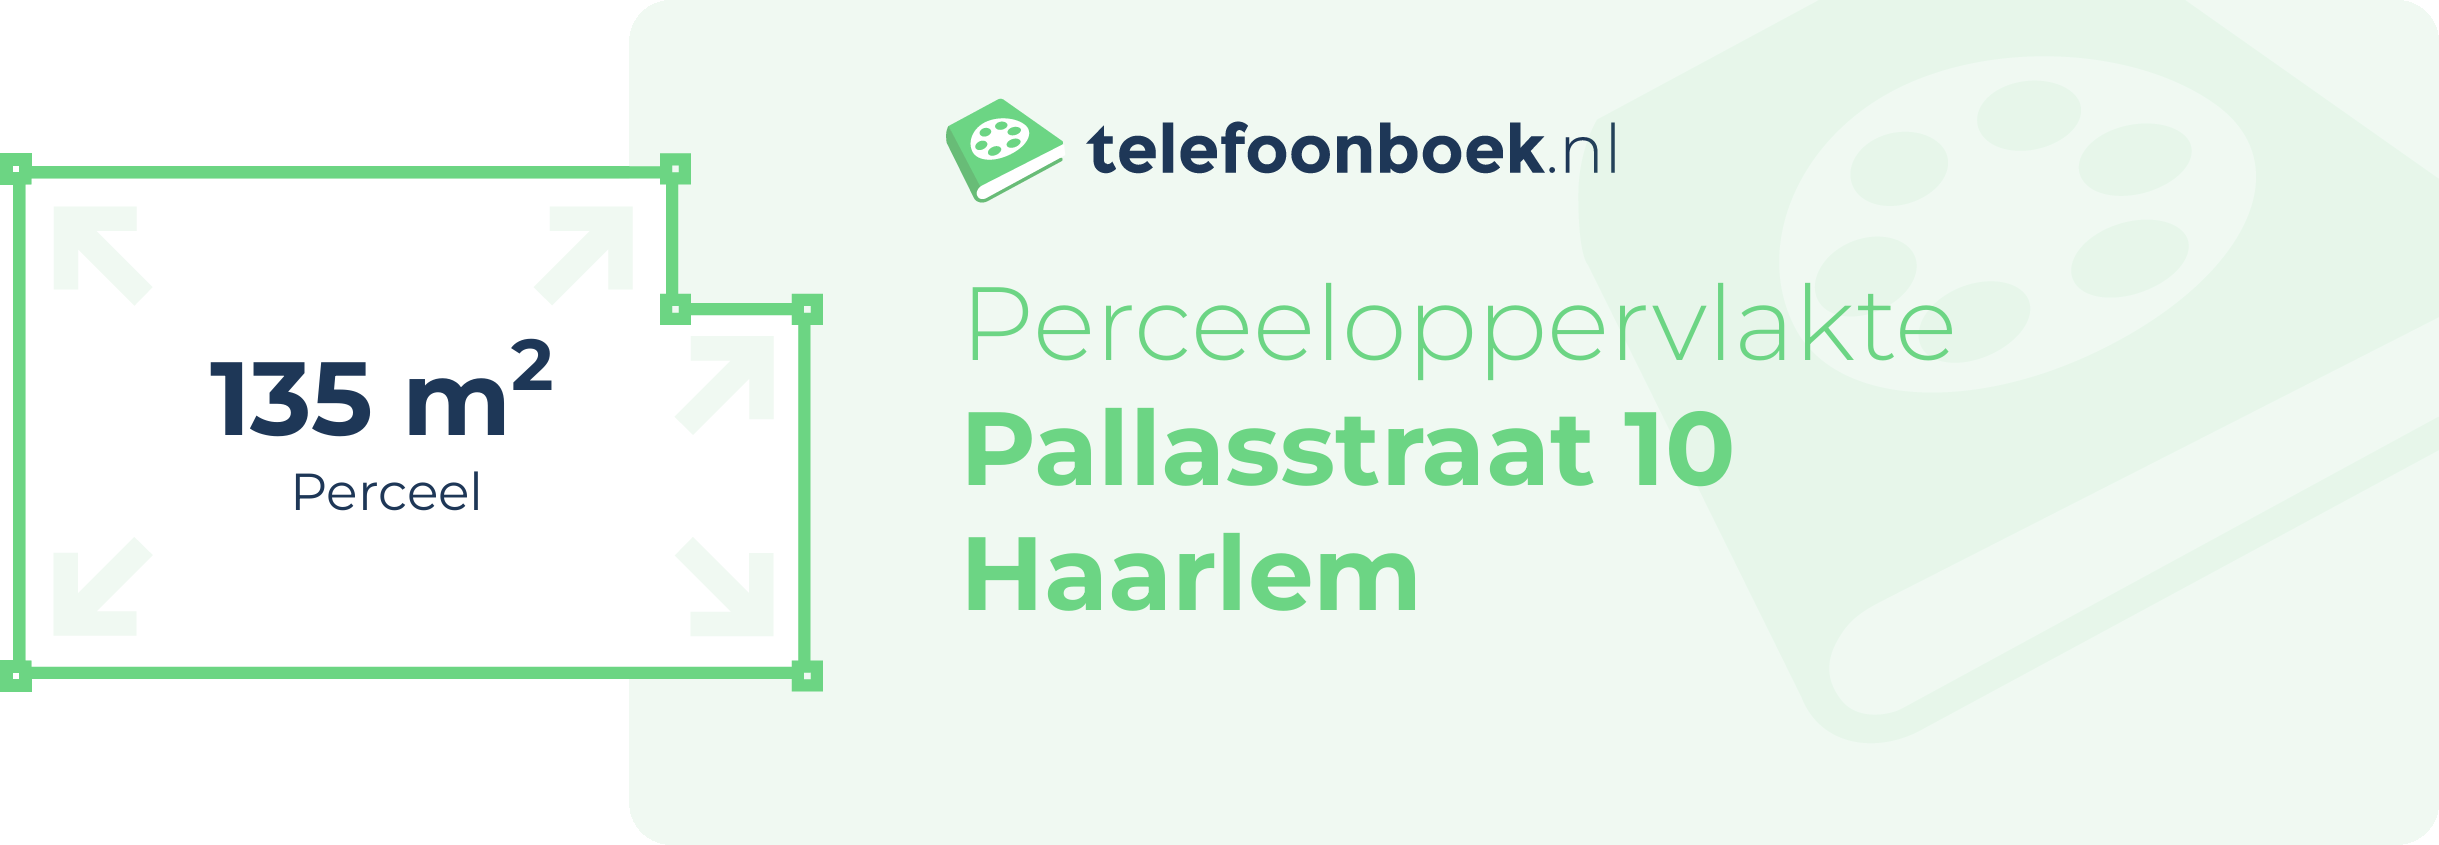 Perceeloppervlakte Pallasstraat 10 Haarlem